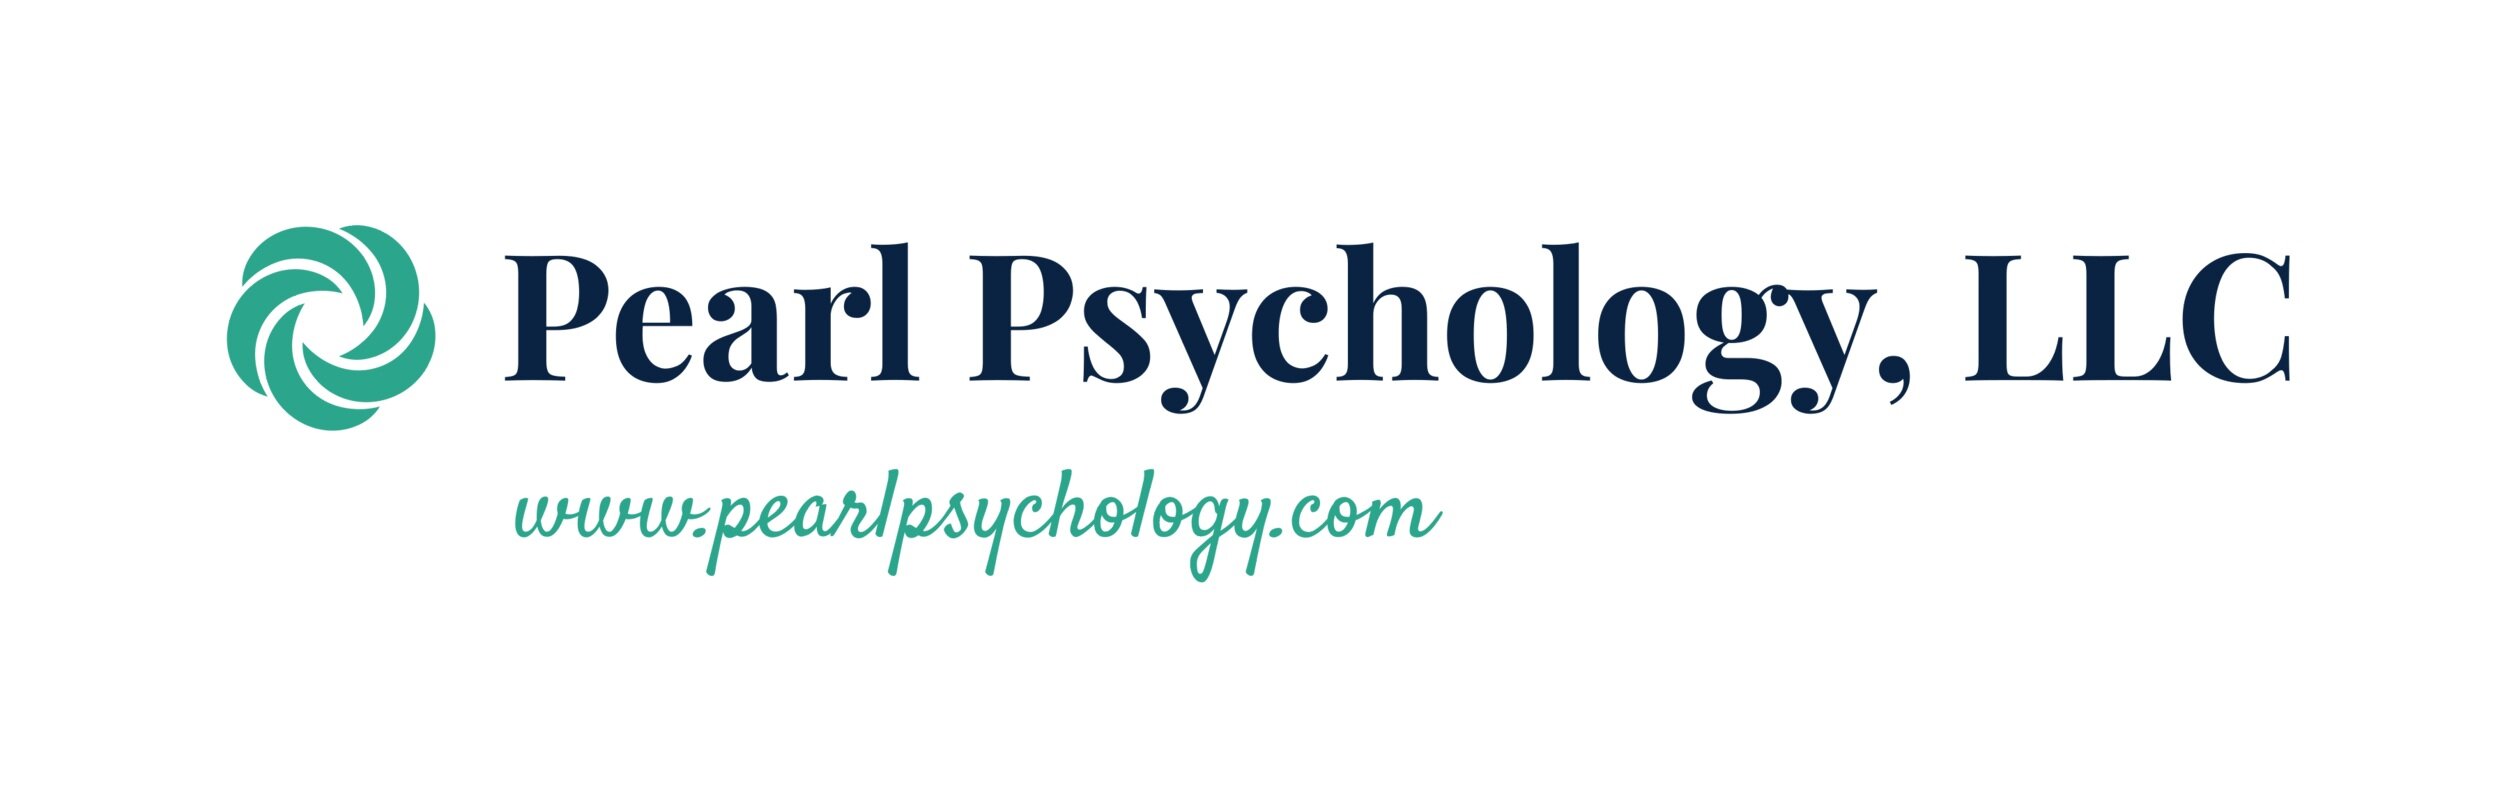 Pearl Psychology, LLC